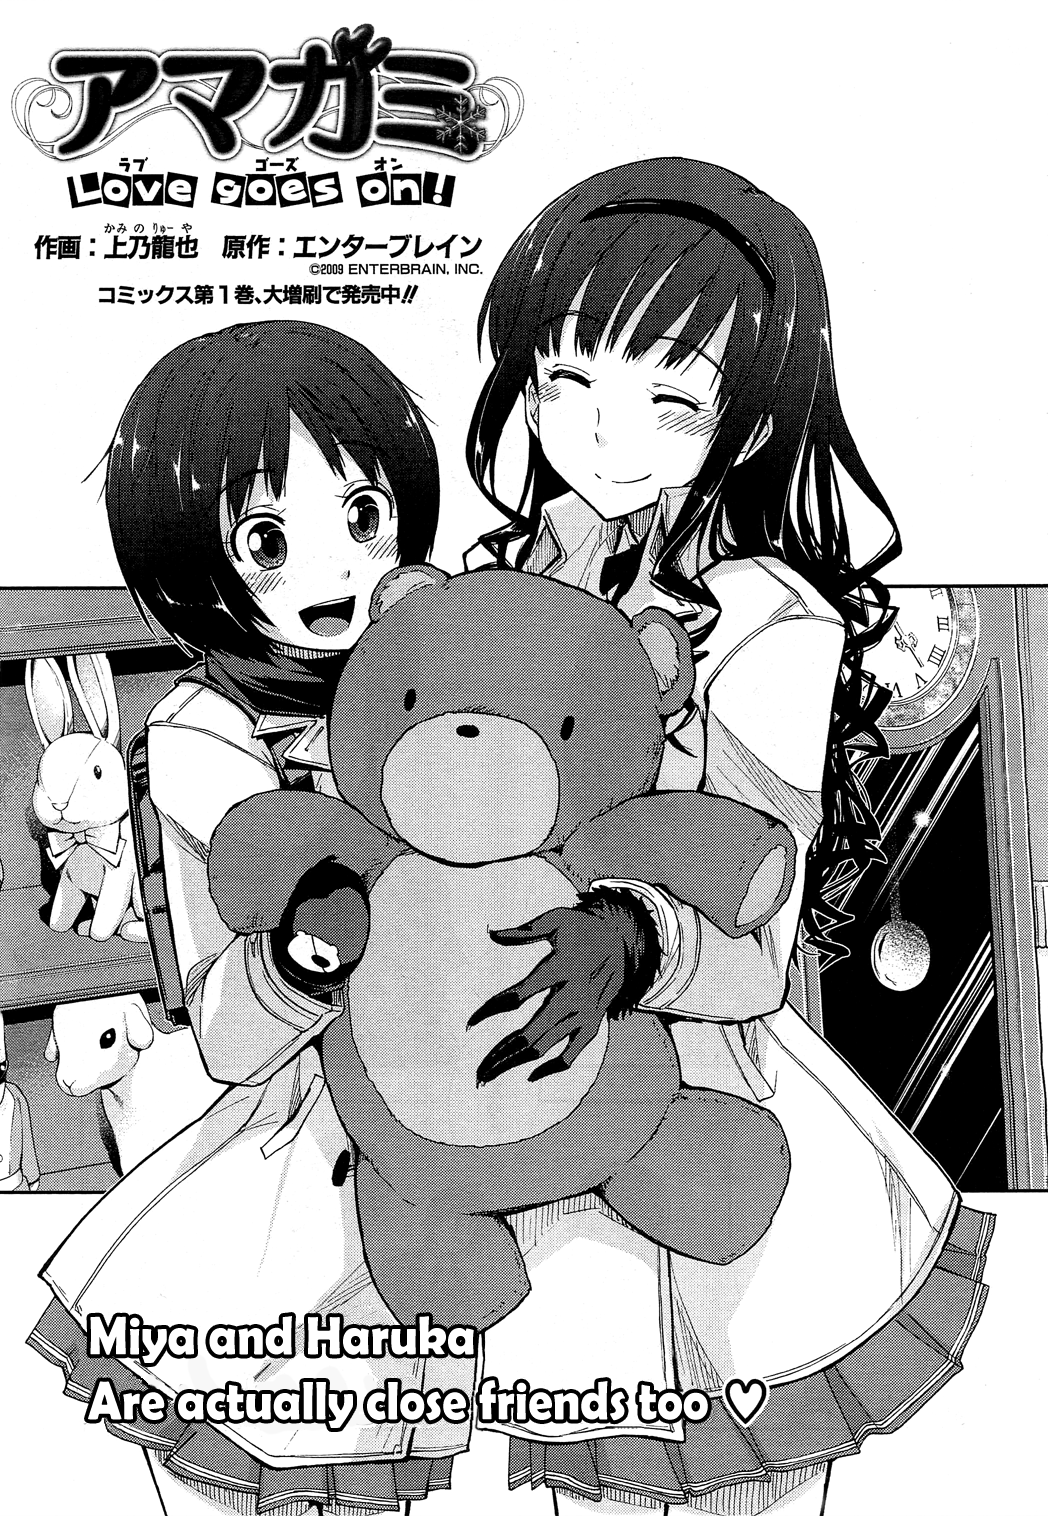 Amagami - Love Goes On! Vol.2 Chapter 9: Morishima Haruka - Part 5 - Picture 2